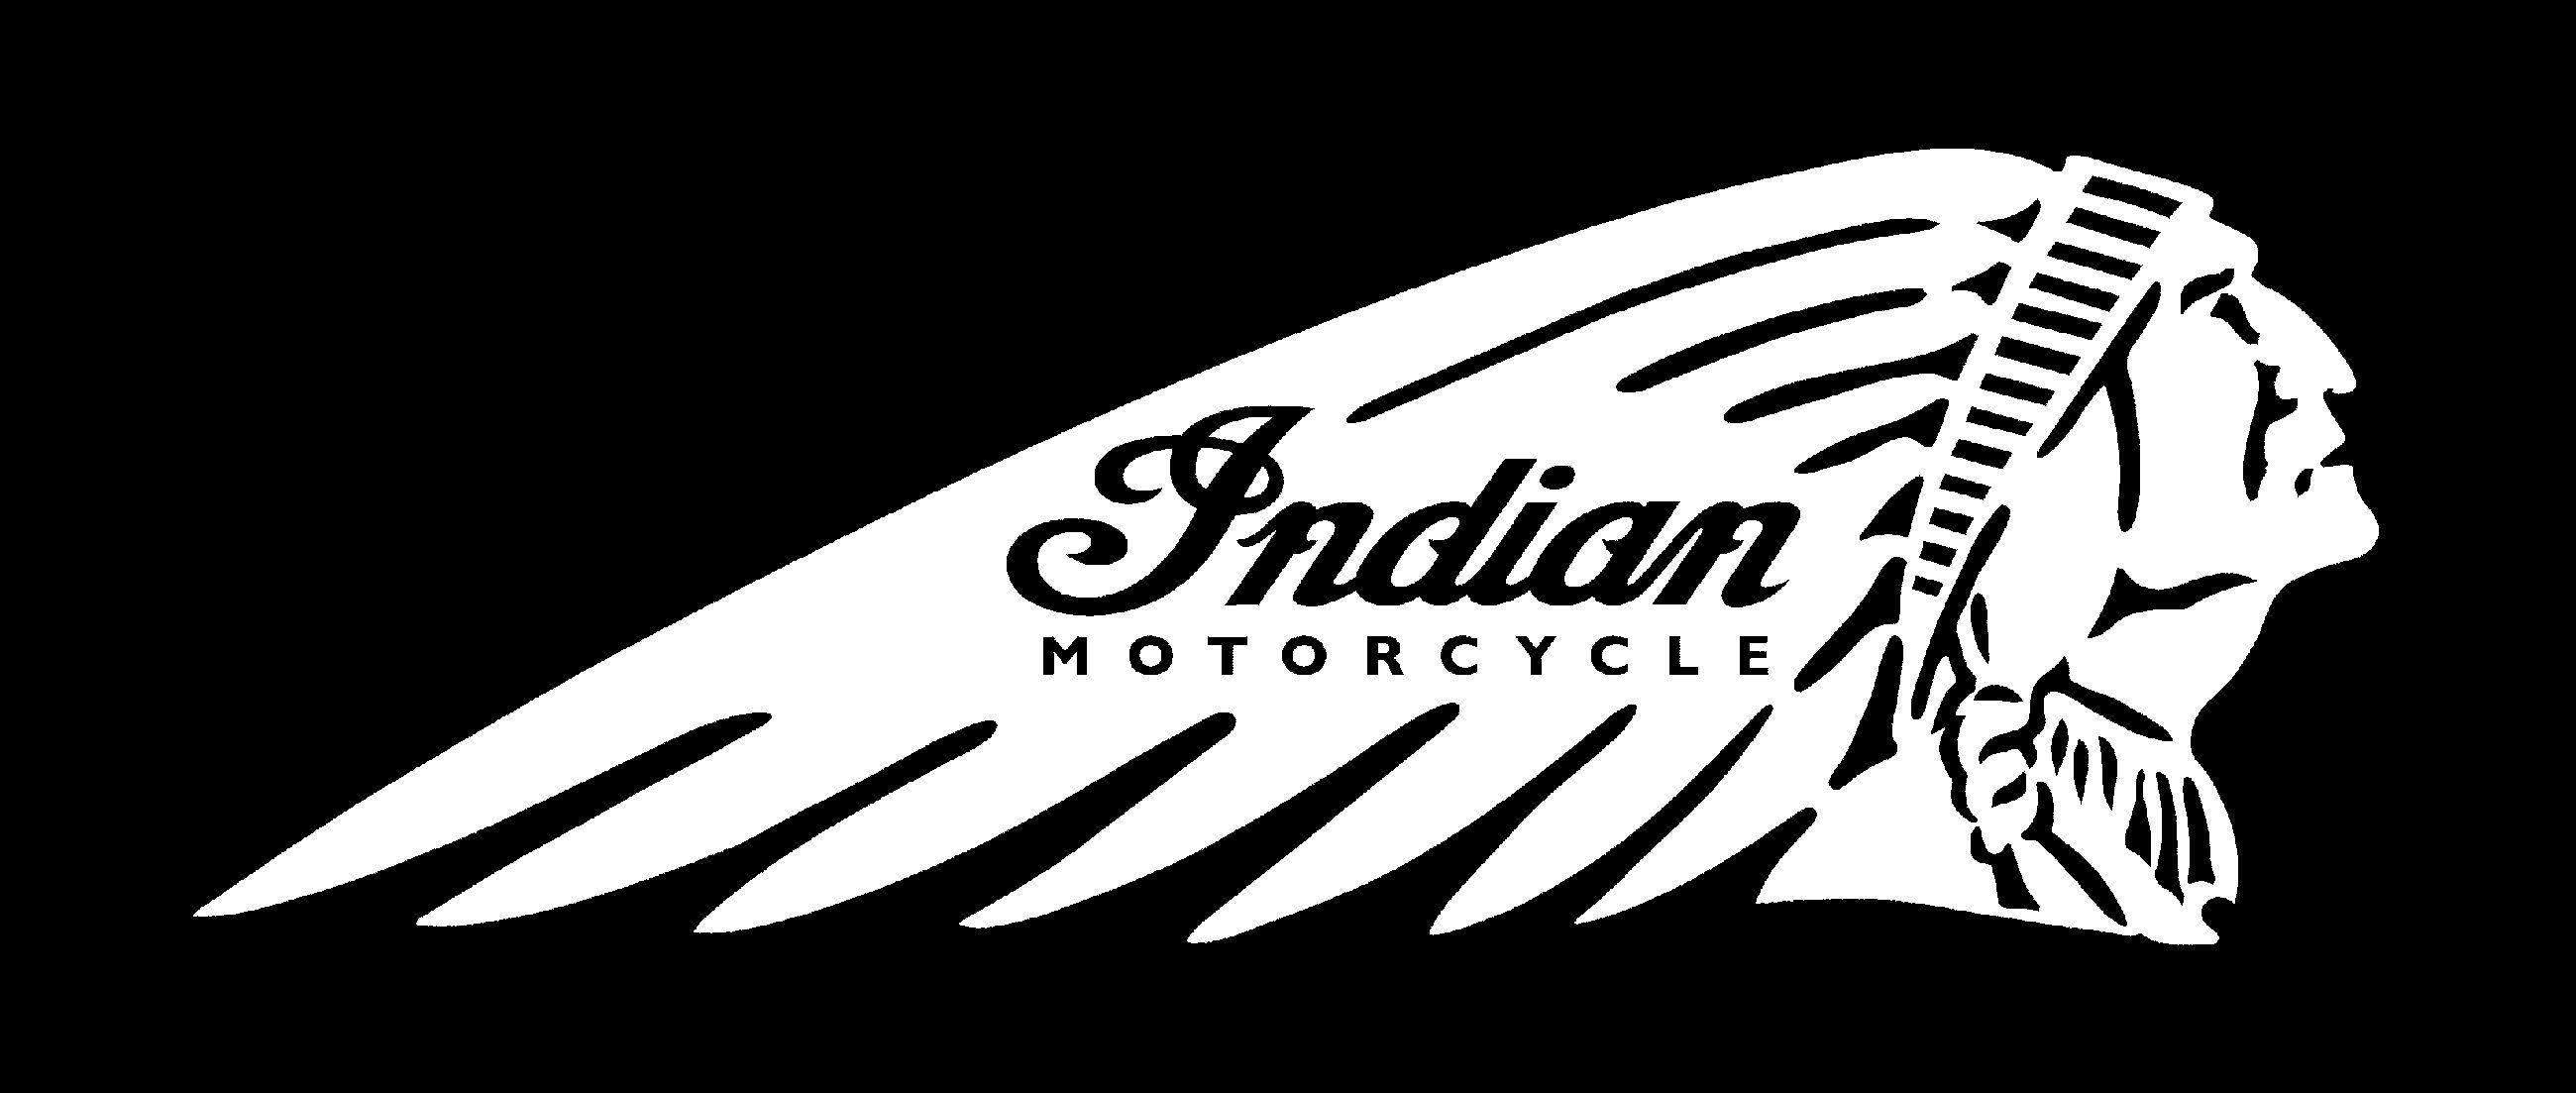 Indian Motorcycle Logo - Indian Logo. Motorcycle brands: logo, specs, history